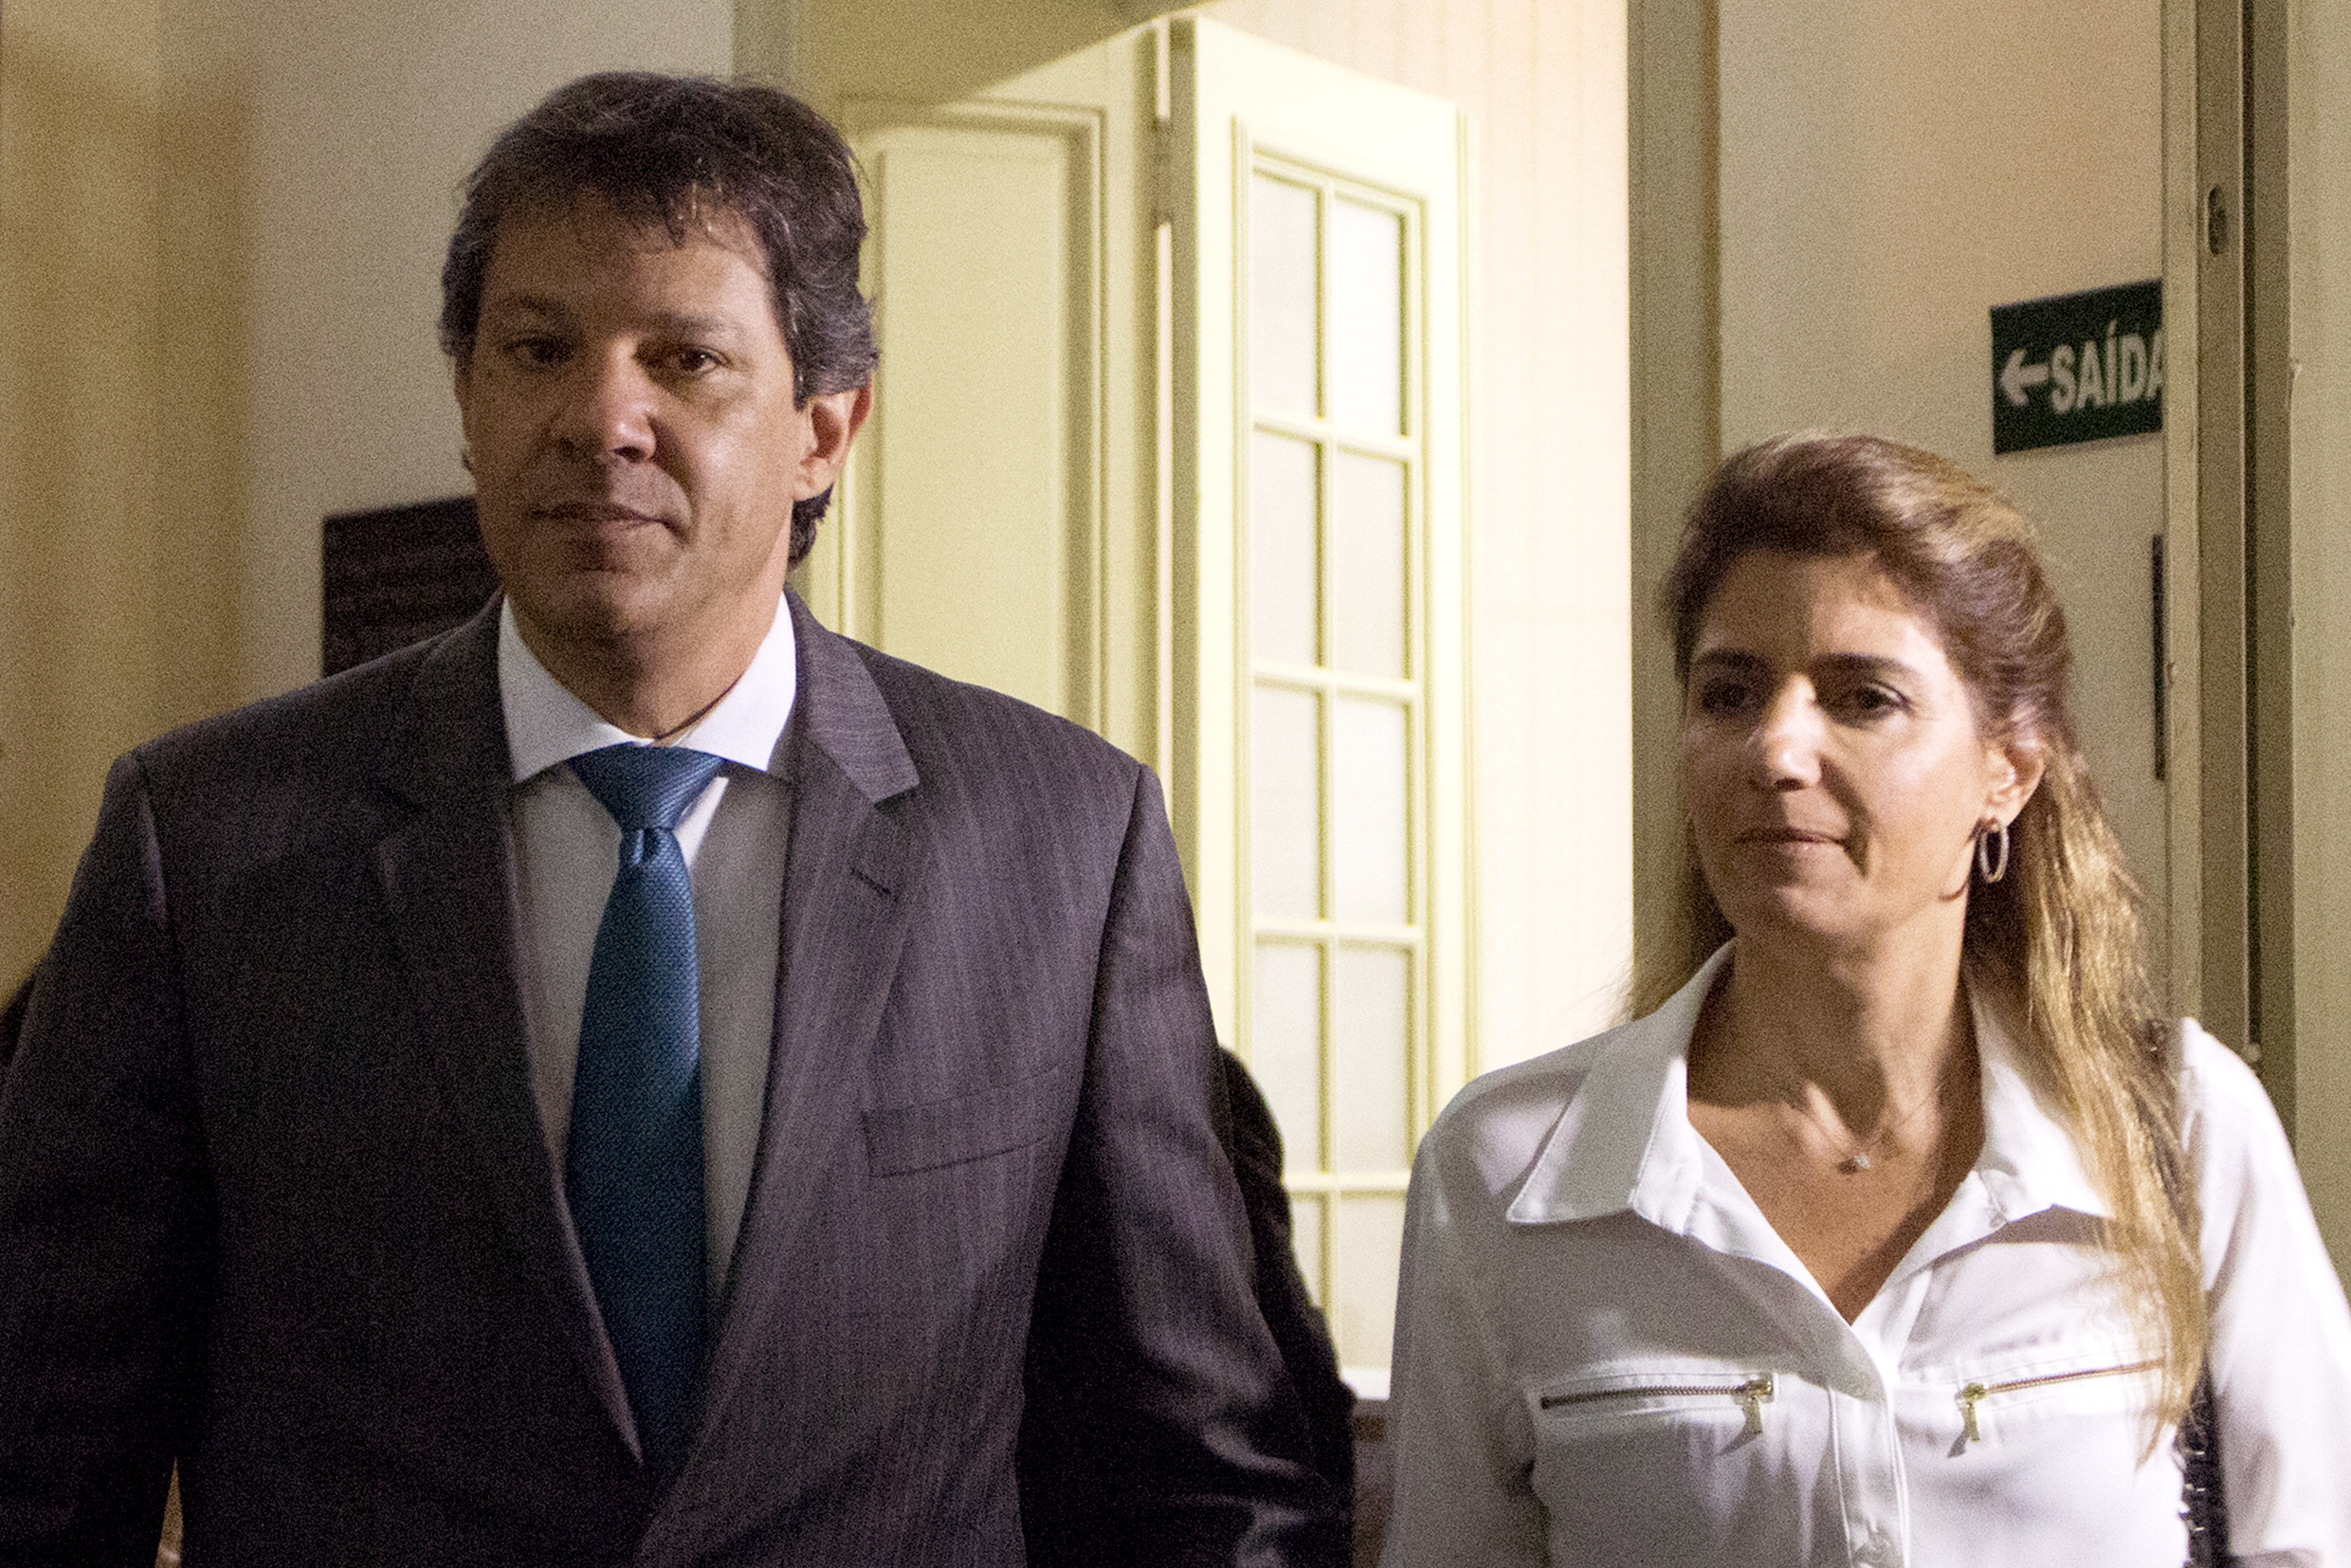 Fernando Haddad, mayor of São Paulo, and his wife Ana Estela arriving